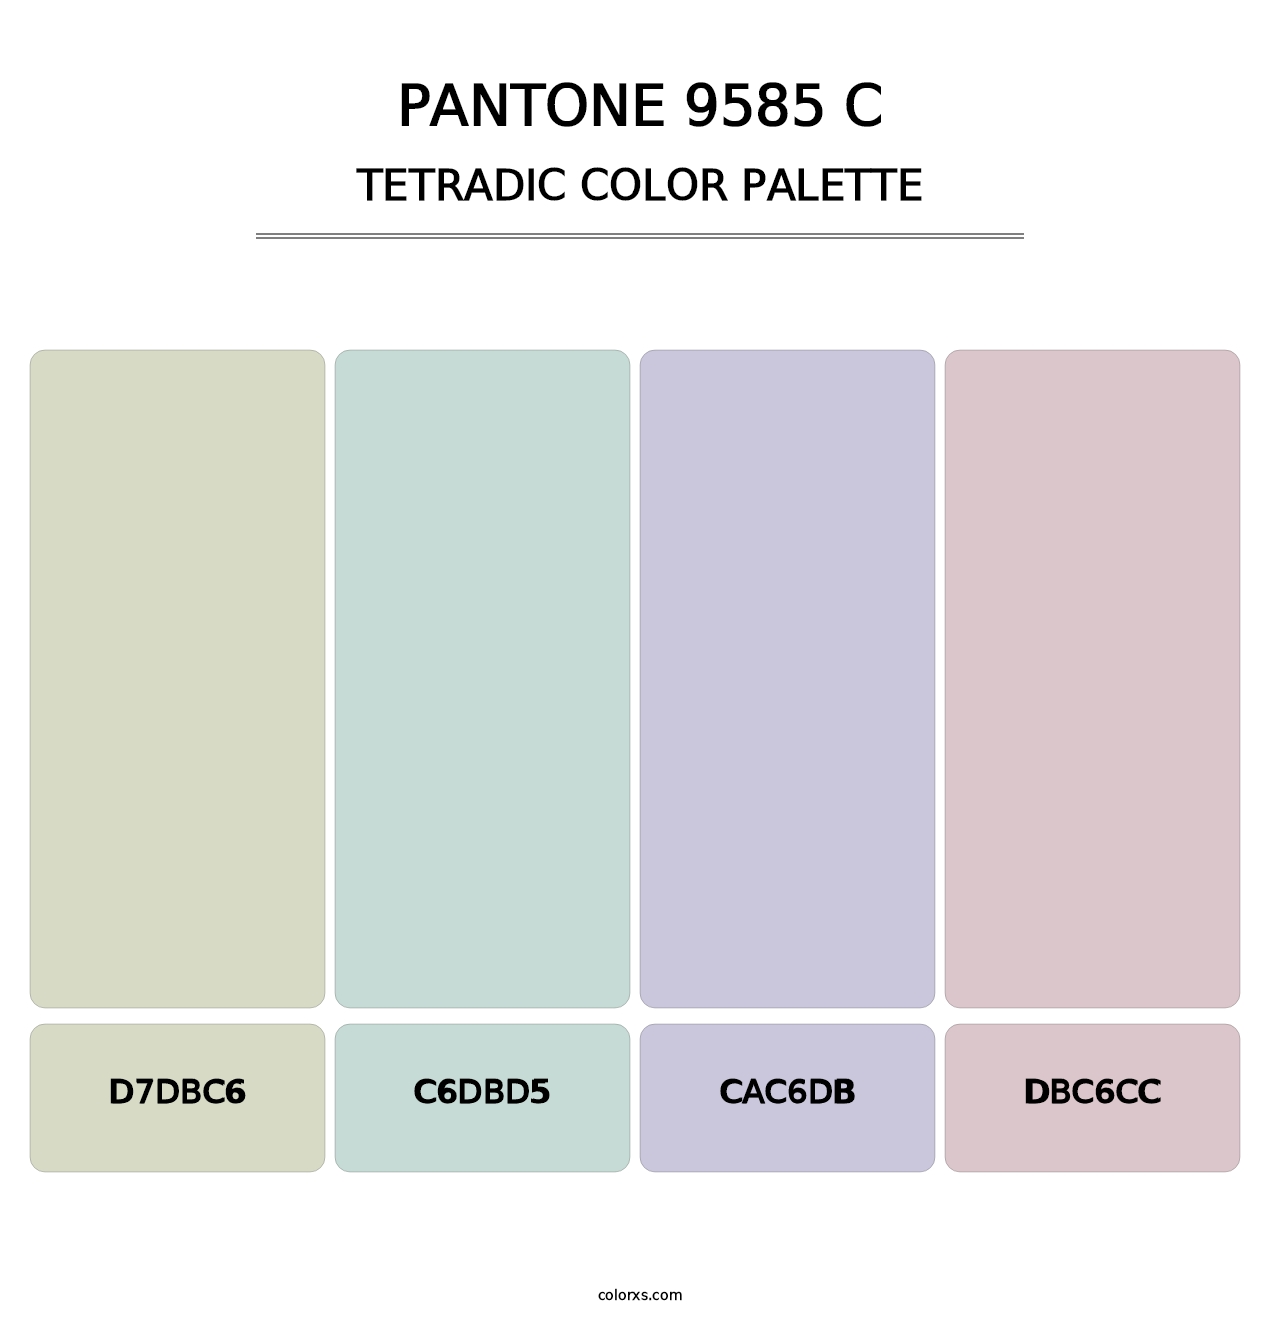 PANTONE 9585 C - Tetradic Color Palette